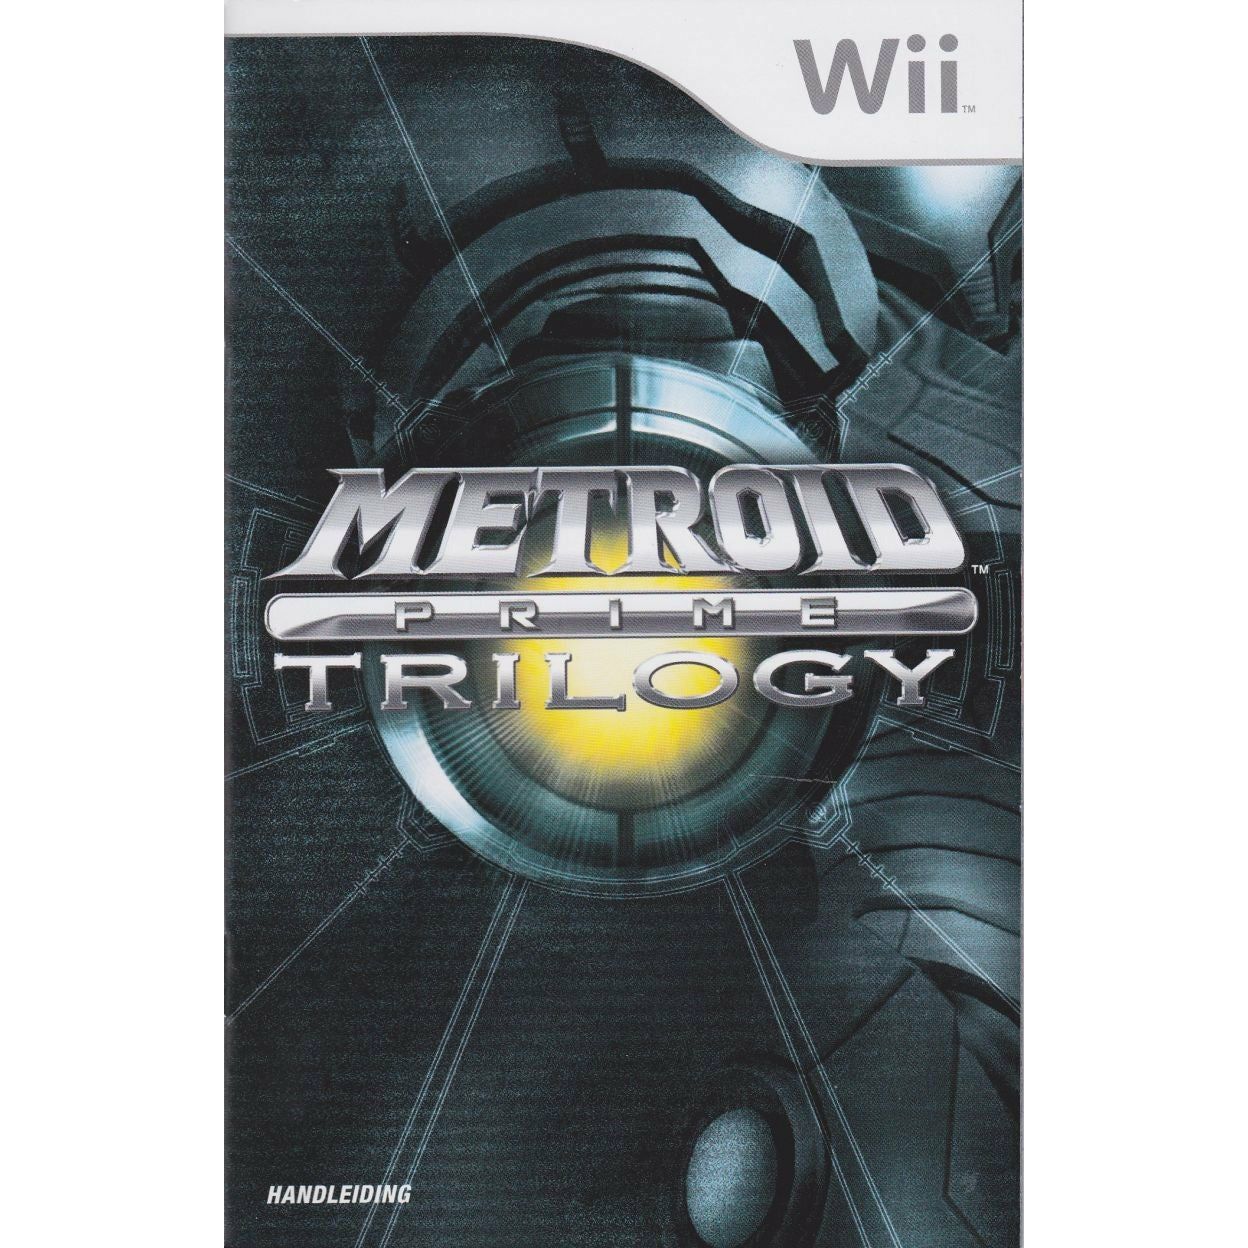 Wii - Trilogie Metroid Prime